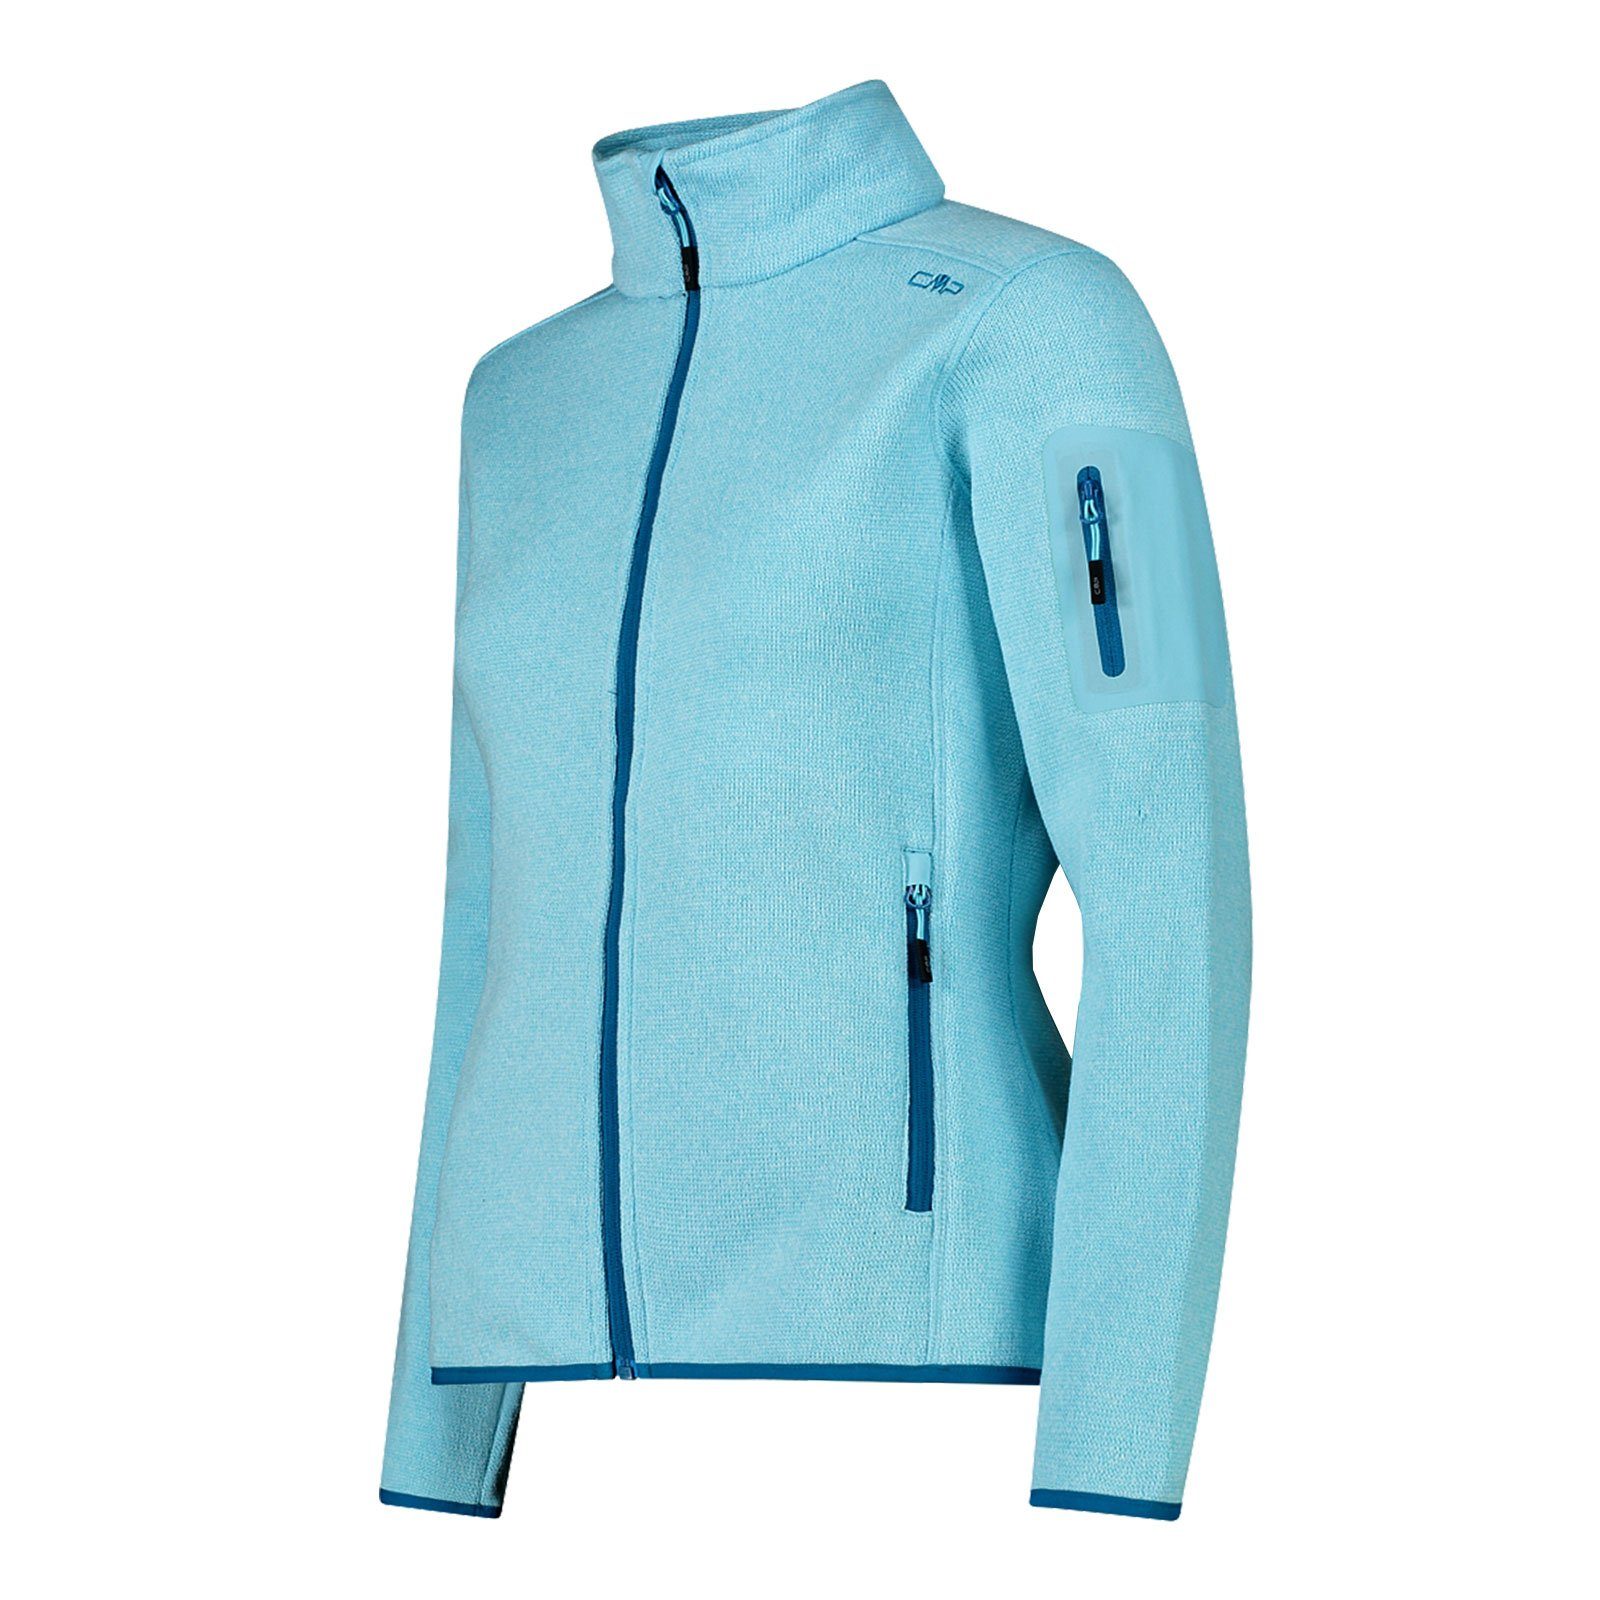 CMP Fleecejacke Woman Jacket aus Knit Material / Tech™ besonders giada anice 3H14746-10LP